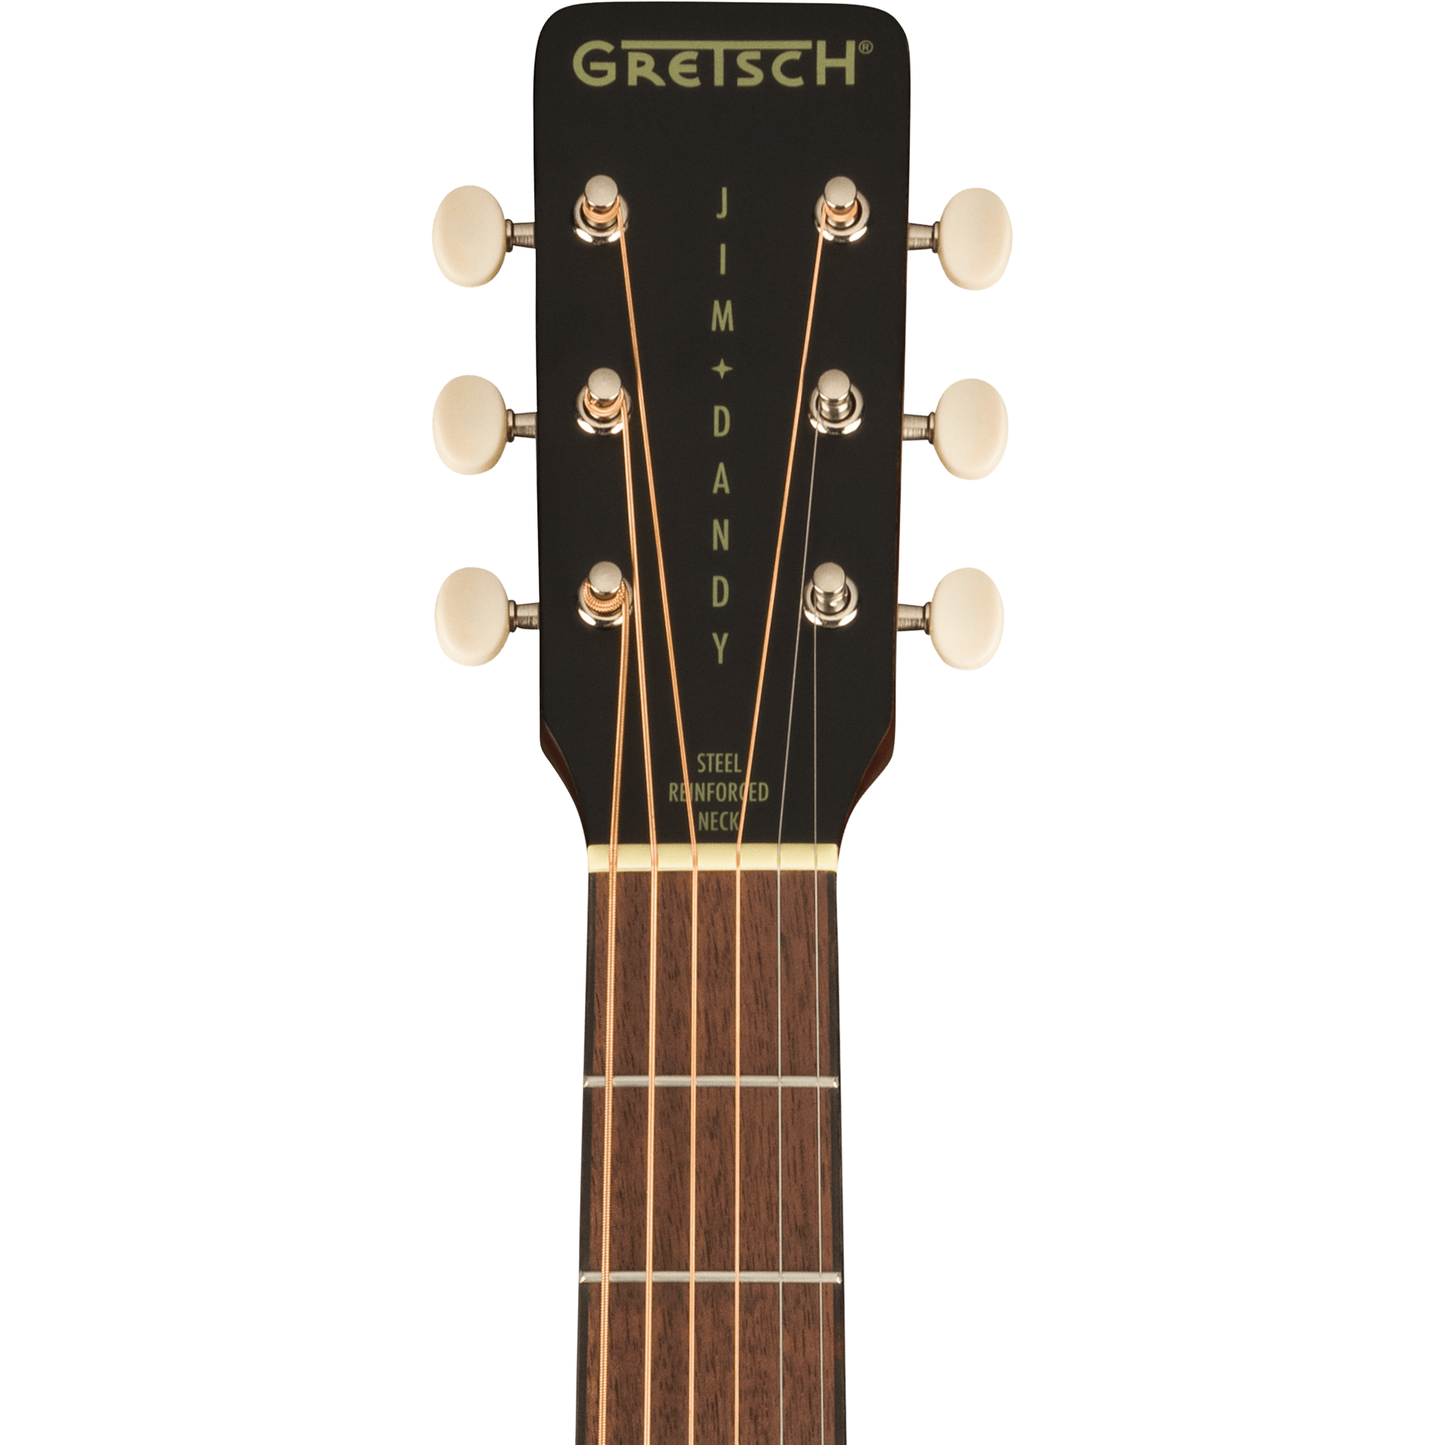 Gretsch Jim Dandy Deltoluxe Dreadnought Acoustic-electric Guitar - Black